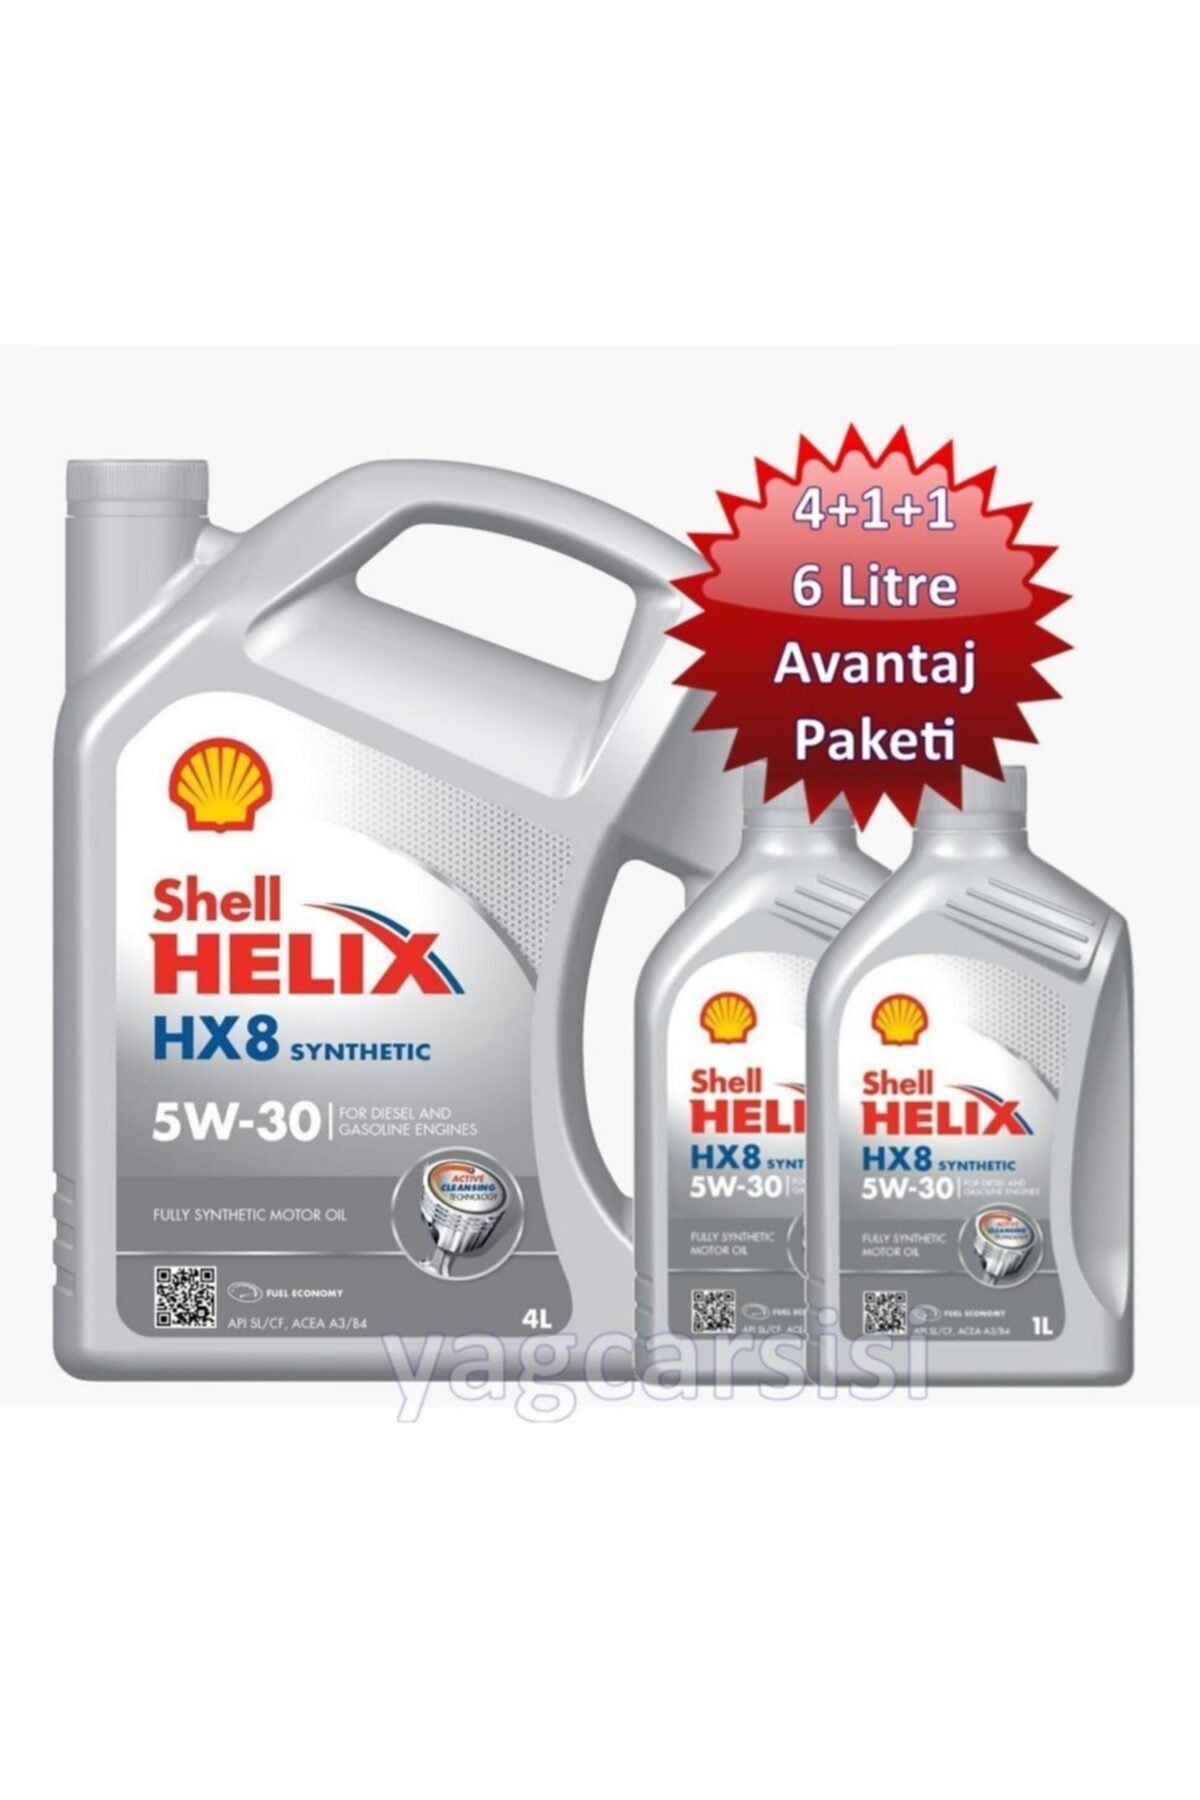 Shell Helix Hx8 Synthetic 5w30 6 Litre